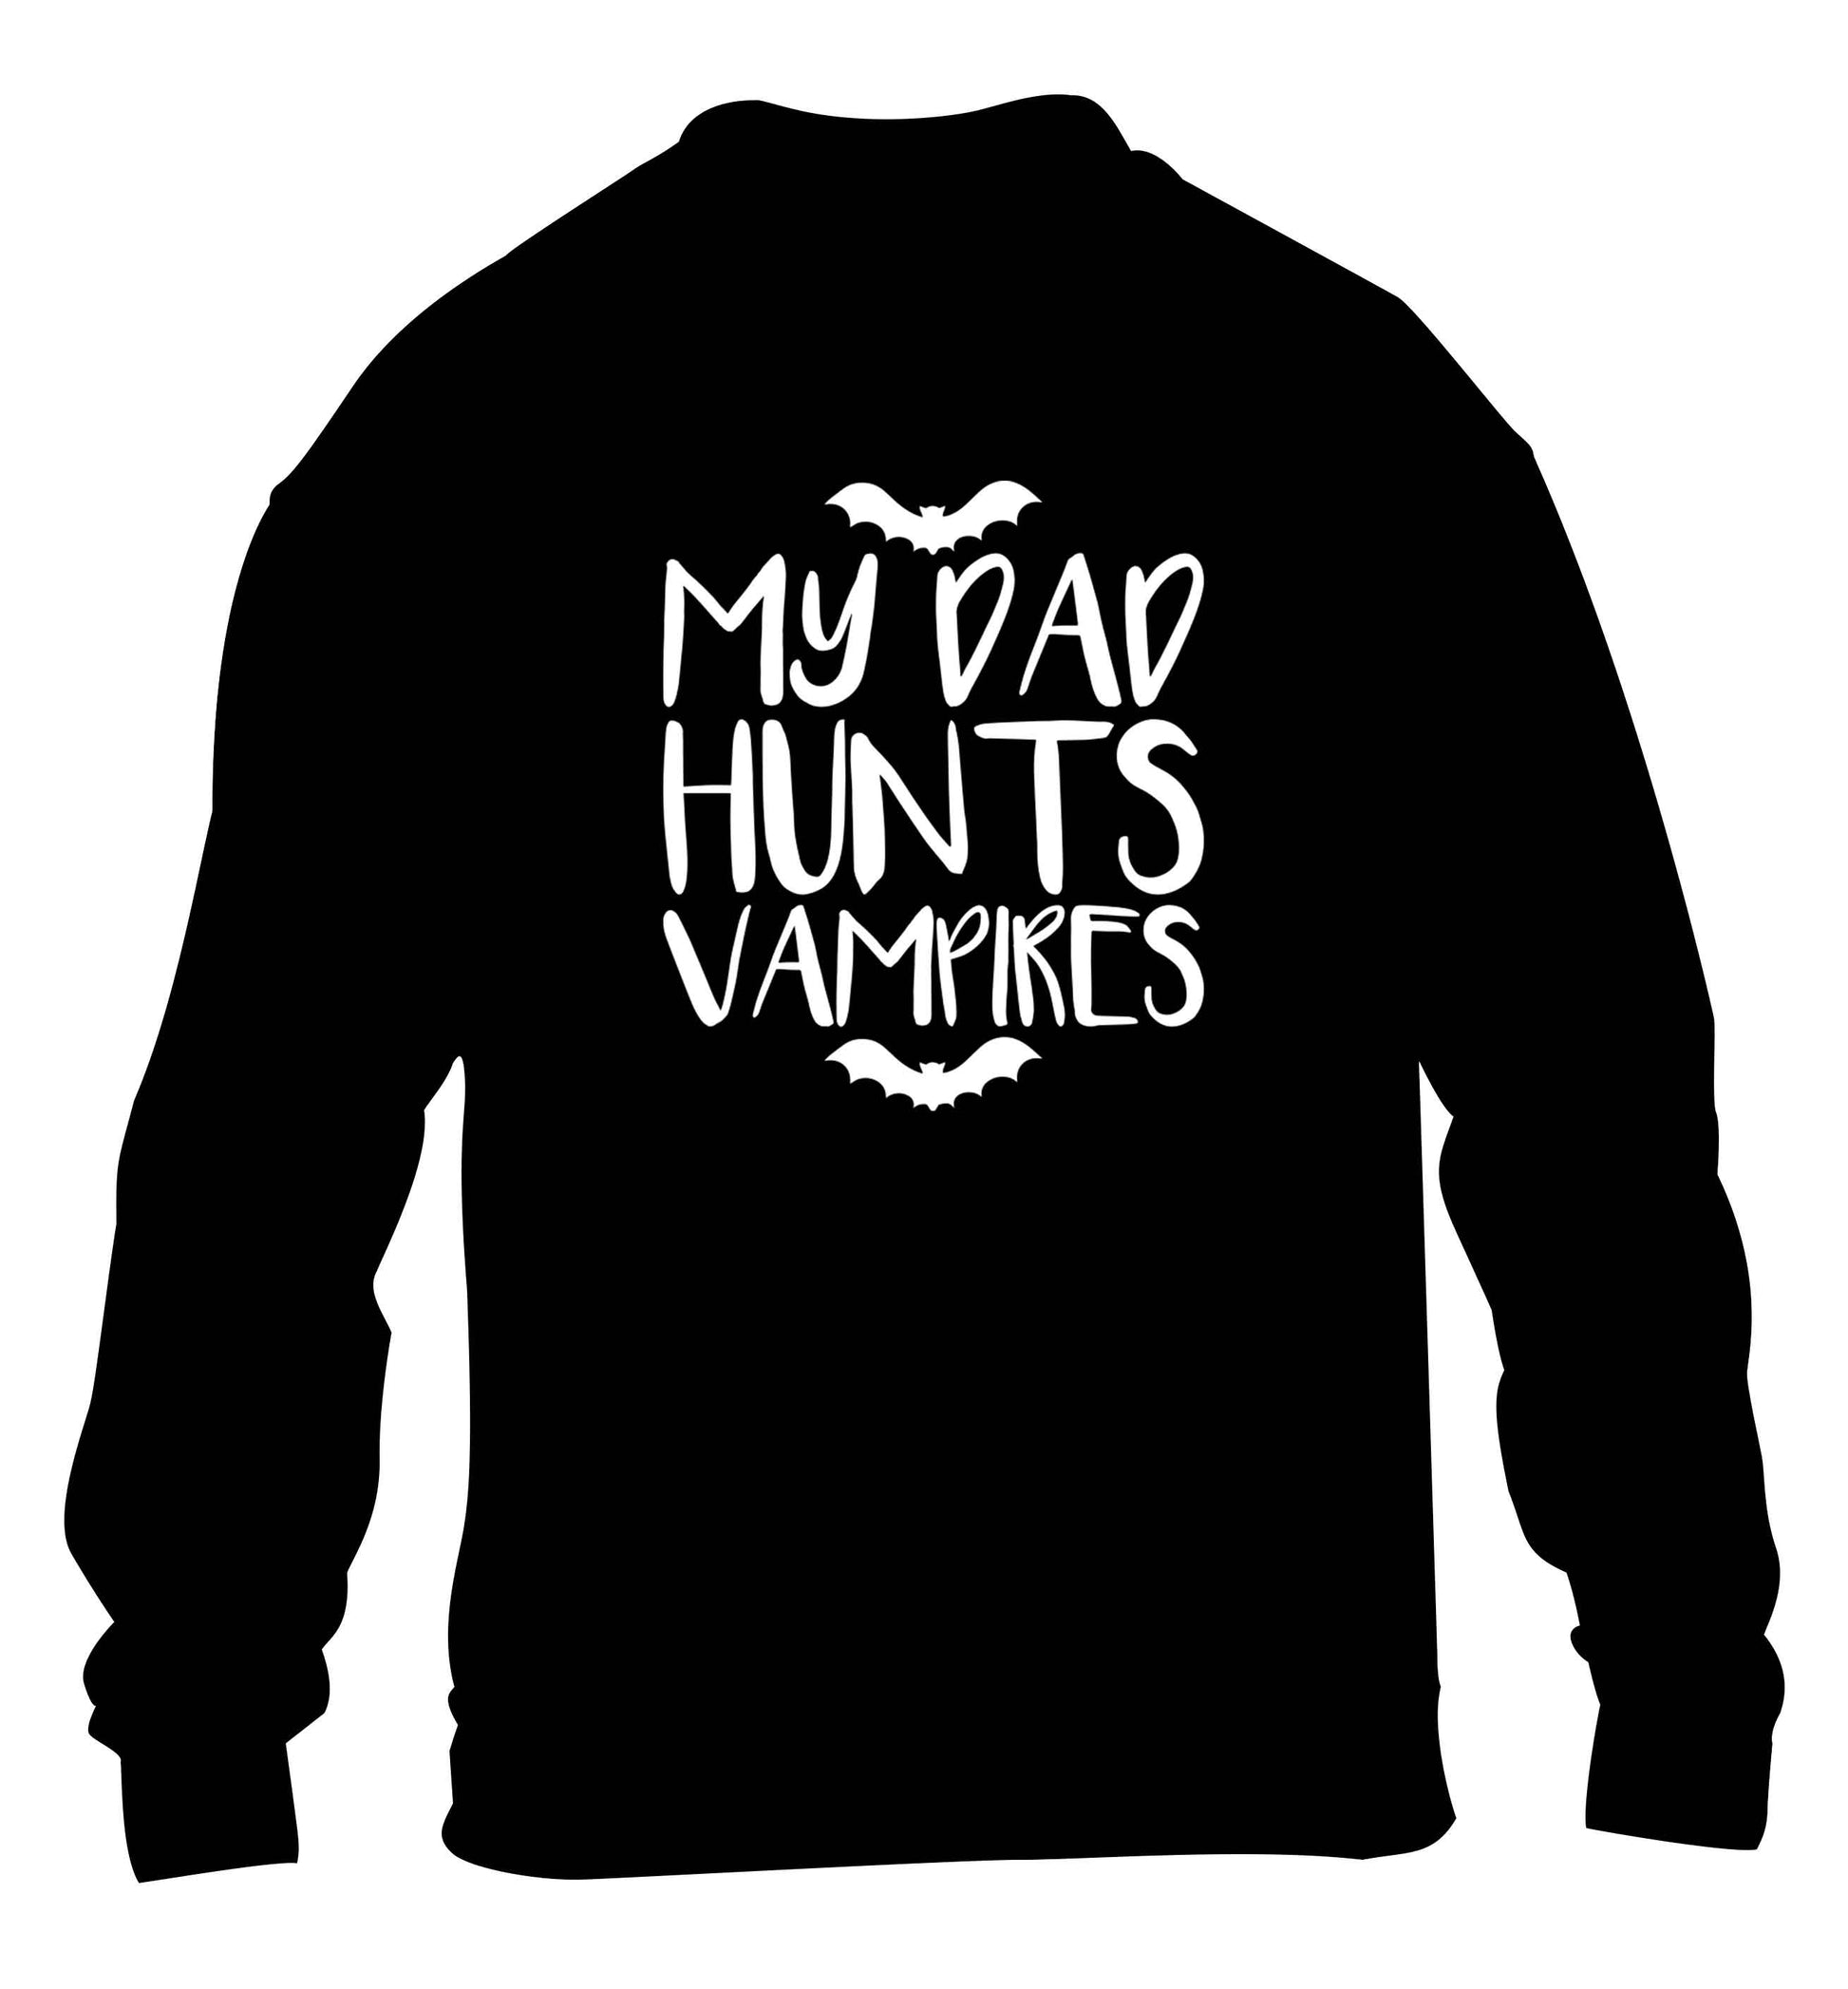 My dad hunts vampires children's black sweater 12-13 Years